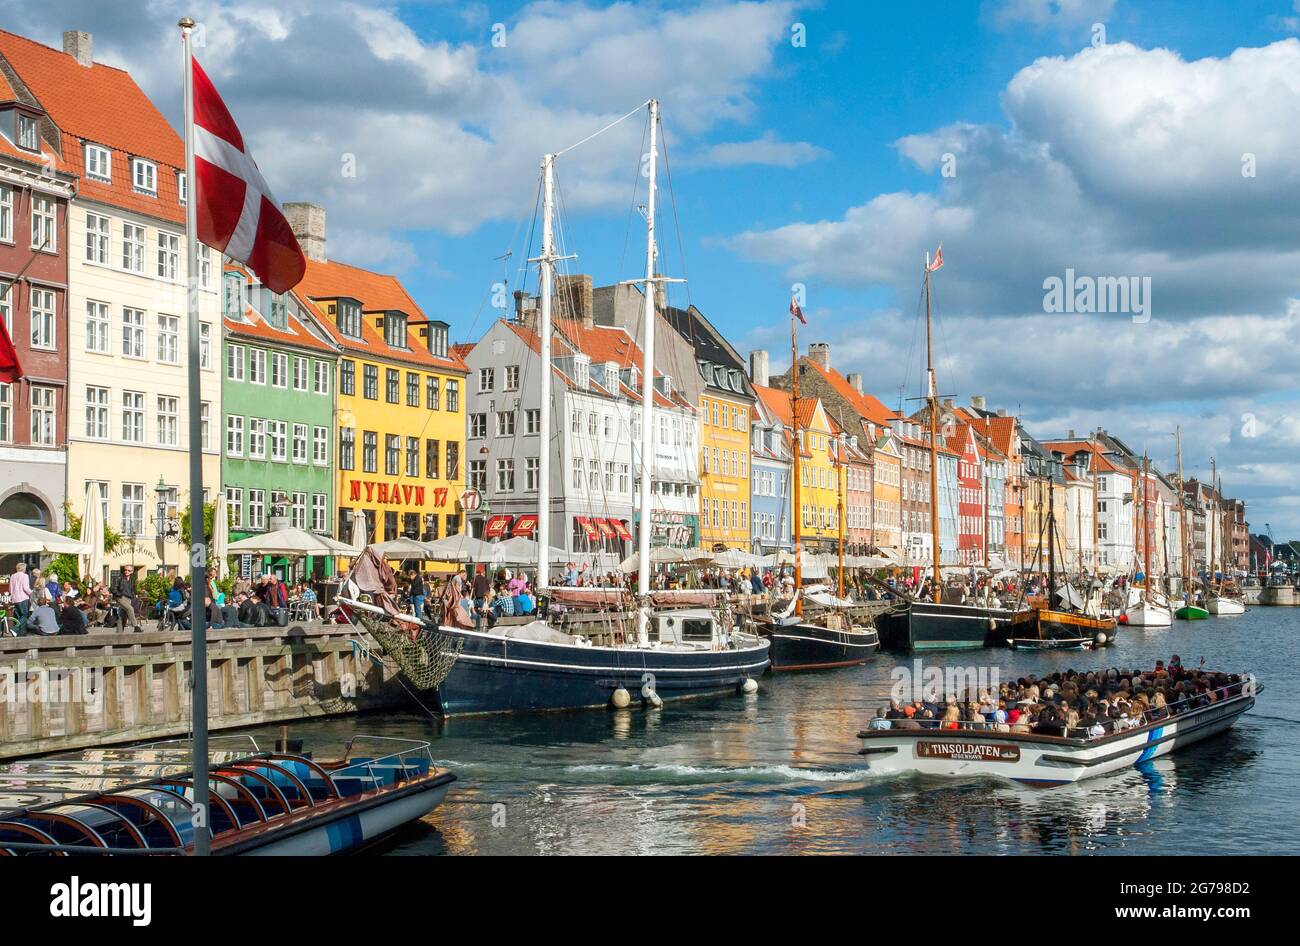 Denmark, Zealand Island / Sjaelland, Copenhagen, Nyhavn, New Harbor in Copenhagen, colorful gabled houses along the canal, tourist attraction harbor tour, sightseeing entertainment district. Stock Photo